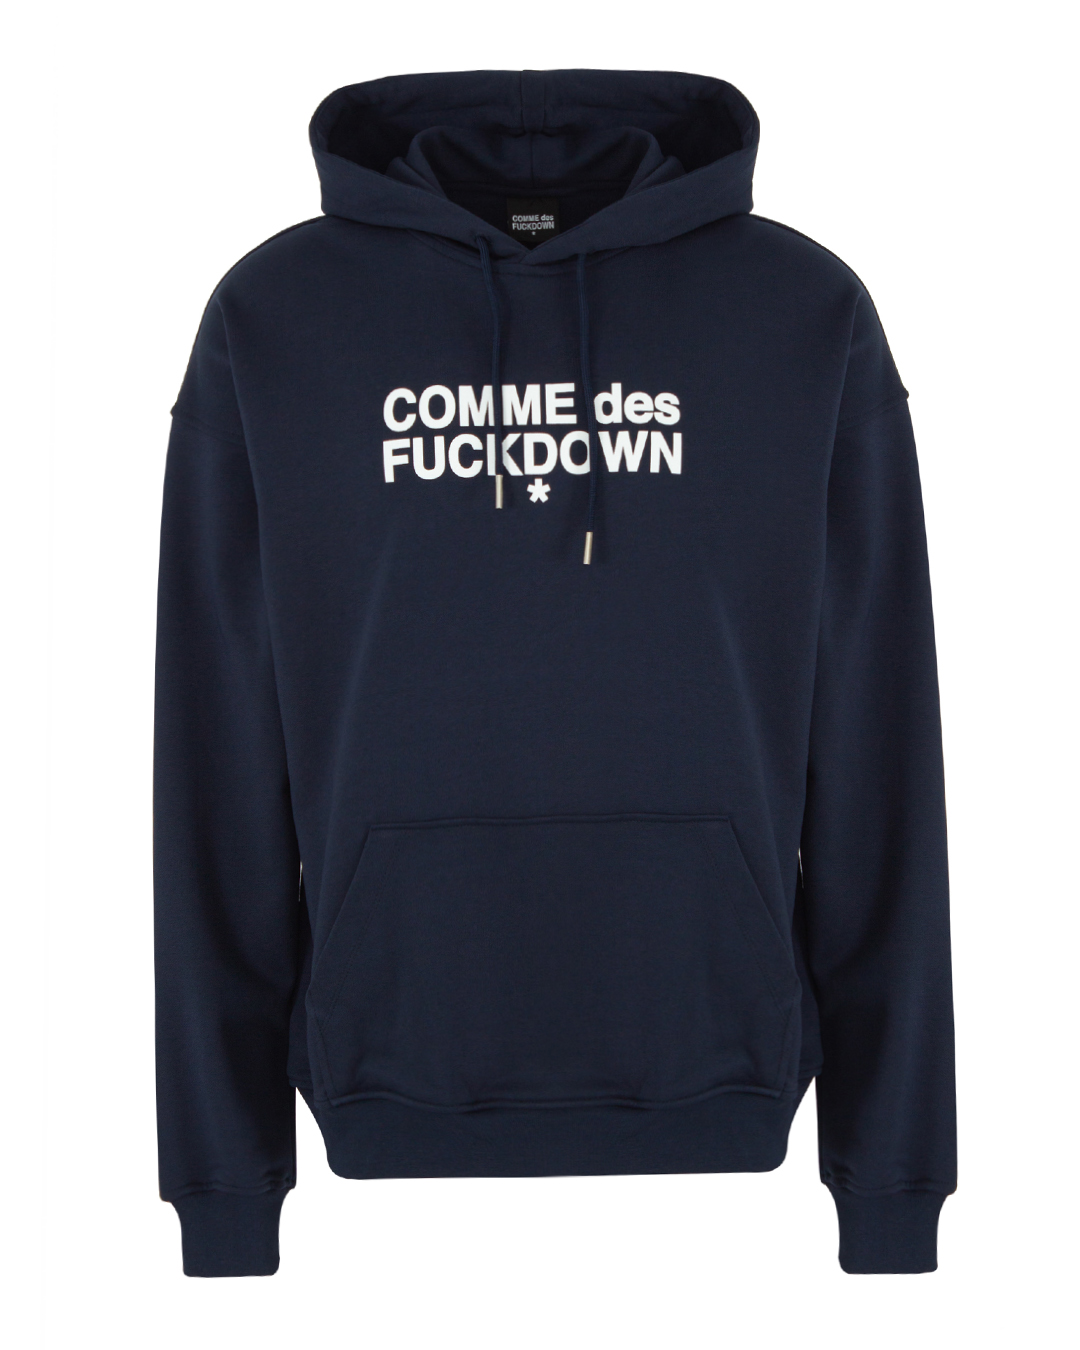 COMME des FUCKDOWN с логотипом бренда  артикул  марки COMME des FUCKDOWN купить за 22800 руб.